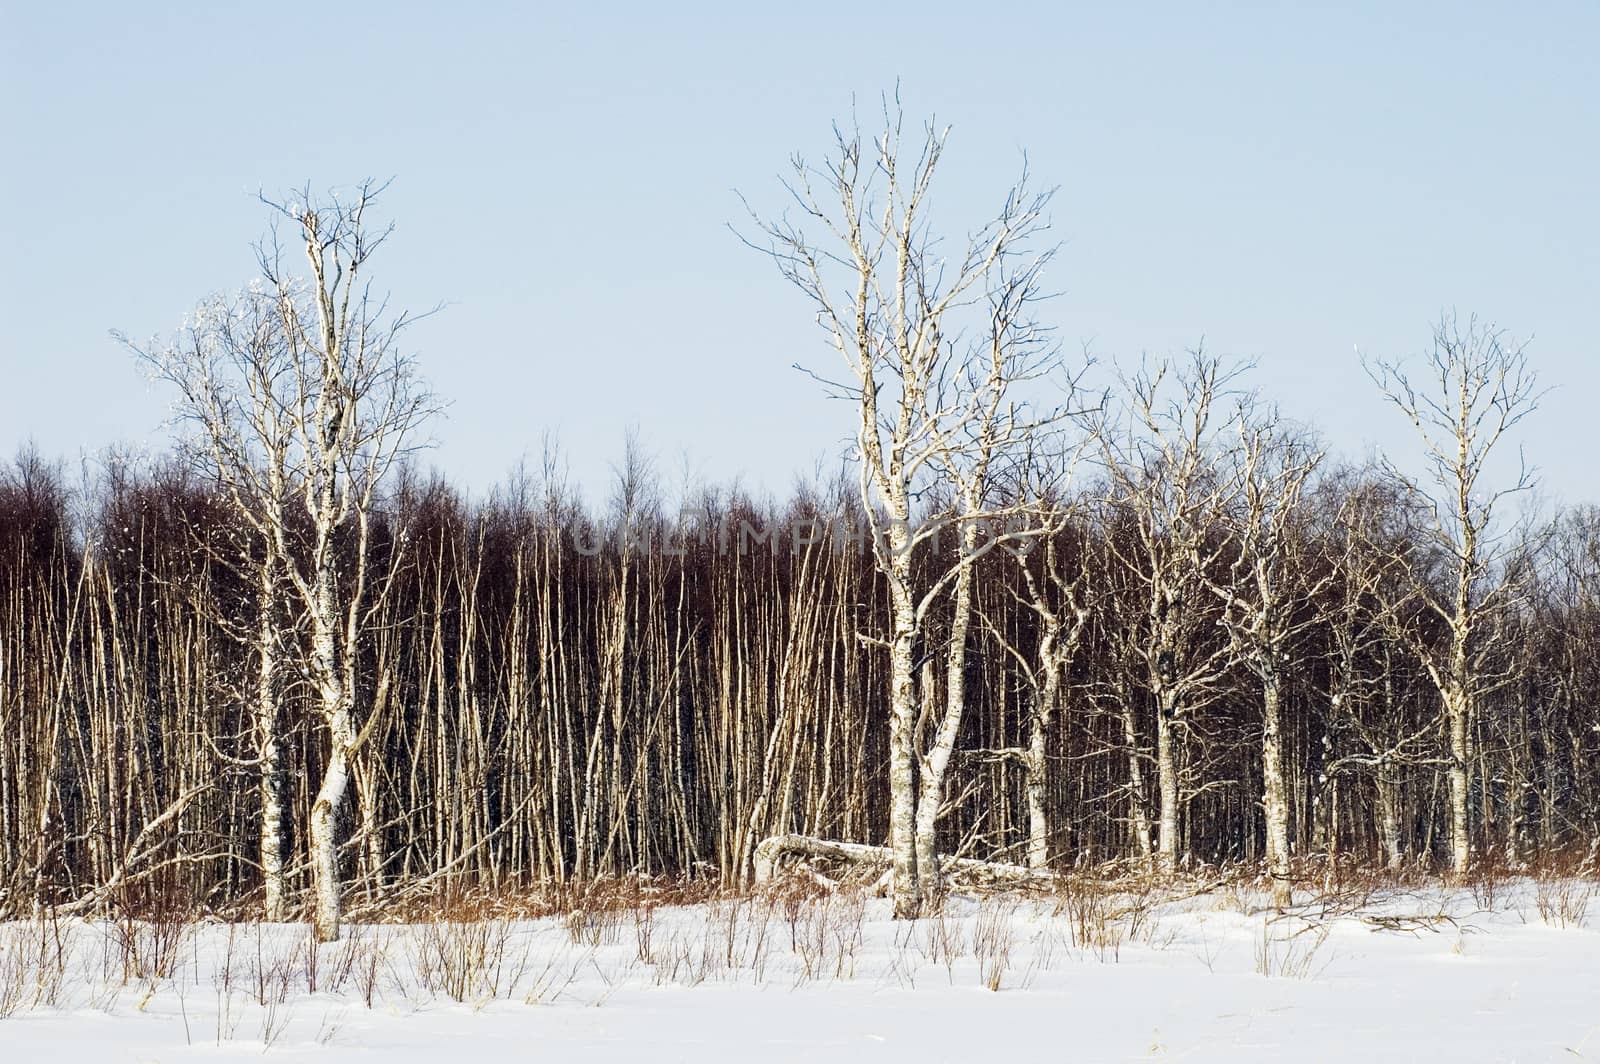 Birchwood in the winter. by SURZ